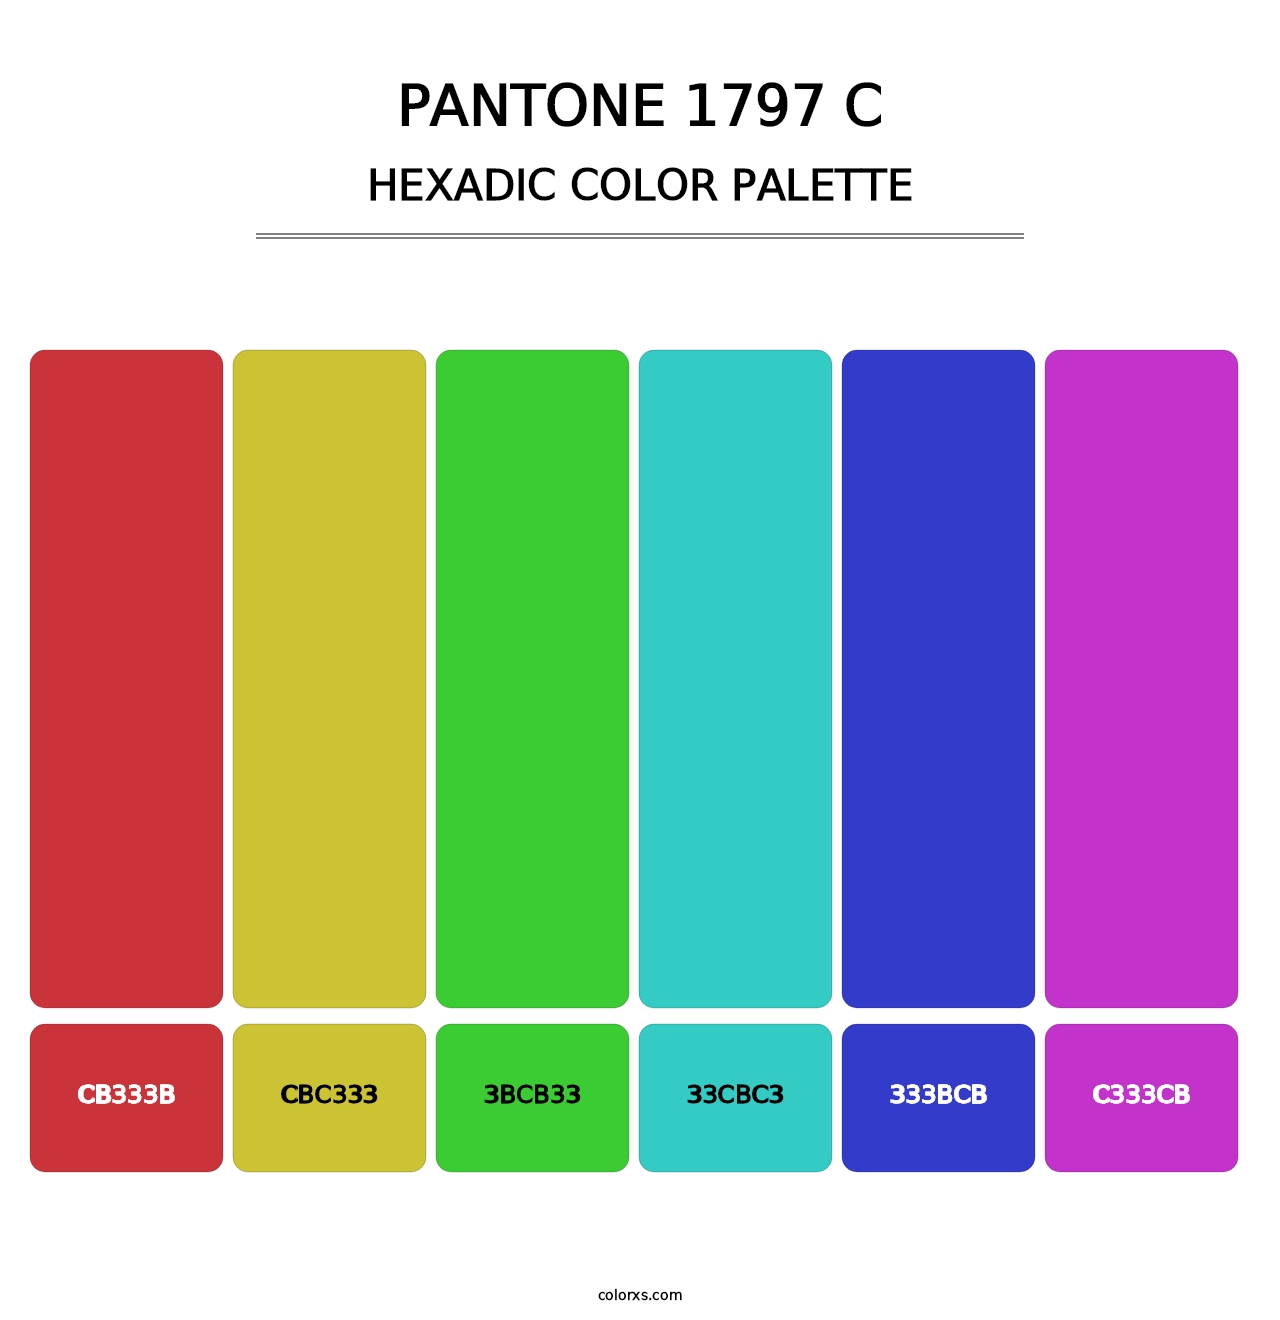 PANTONE 1797 C - Hexadic Color Palette